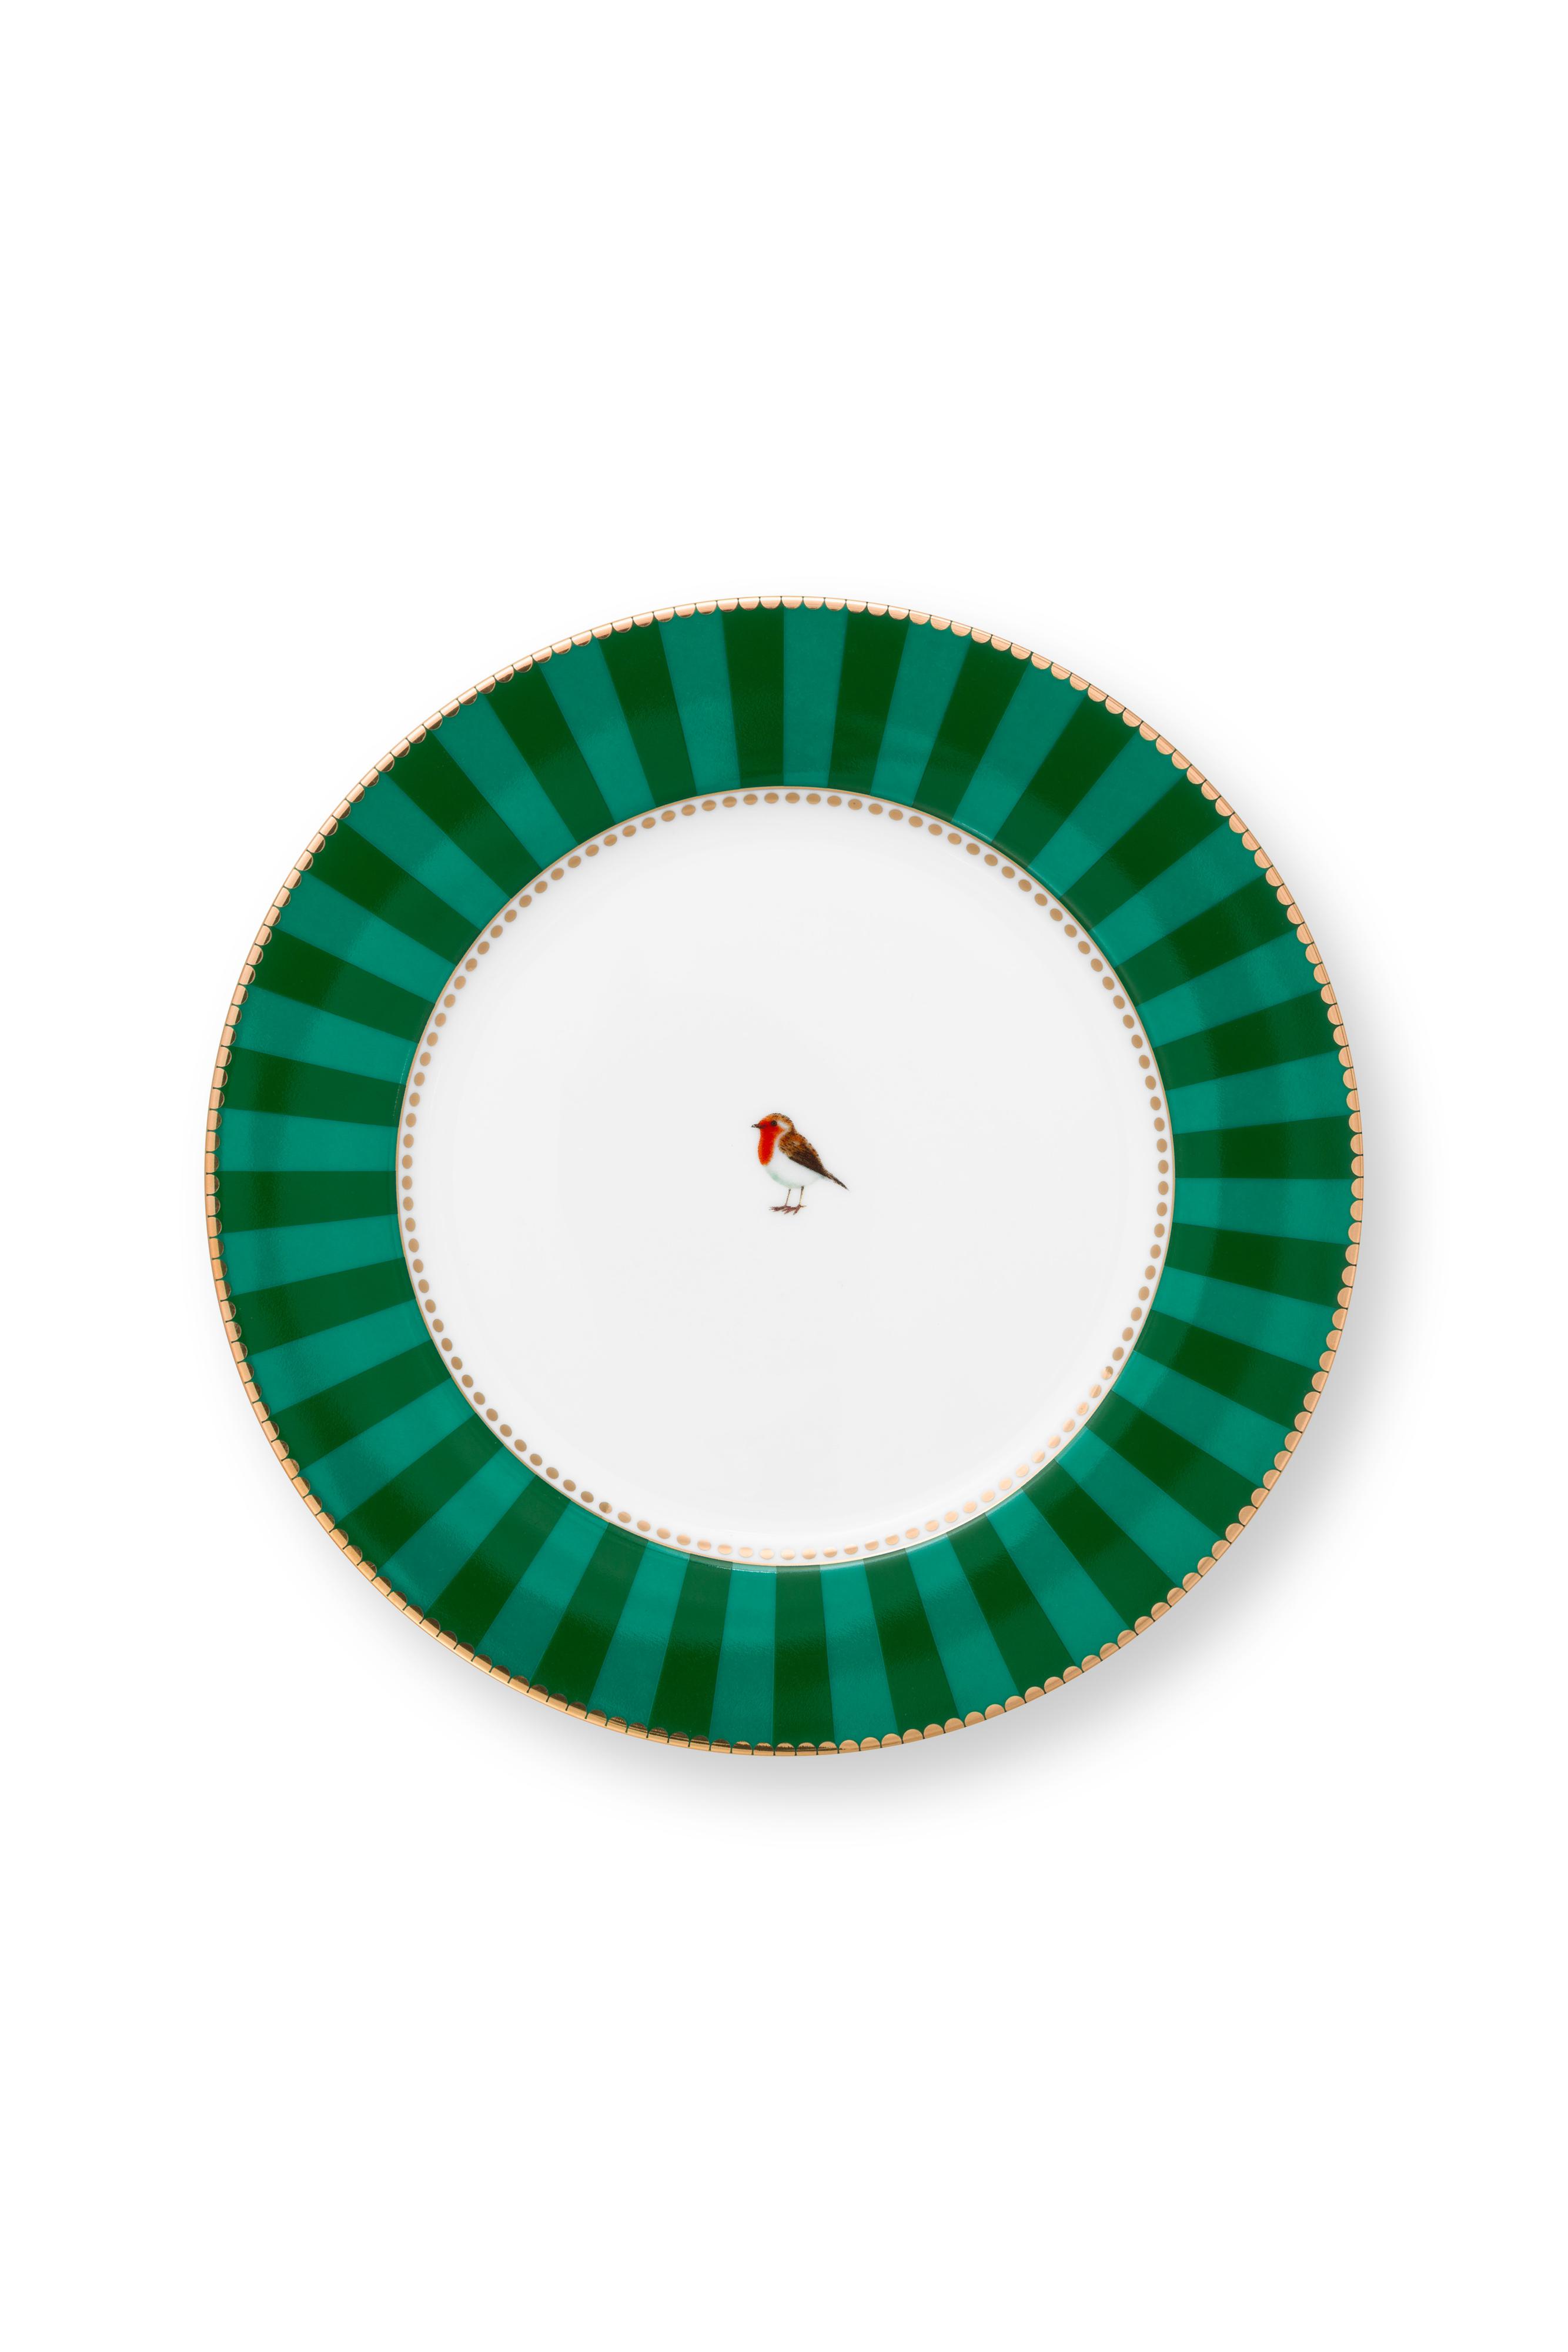 Plate Love Birds Stripes Emerald-green 21cm Gift